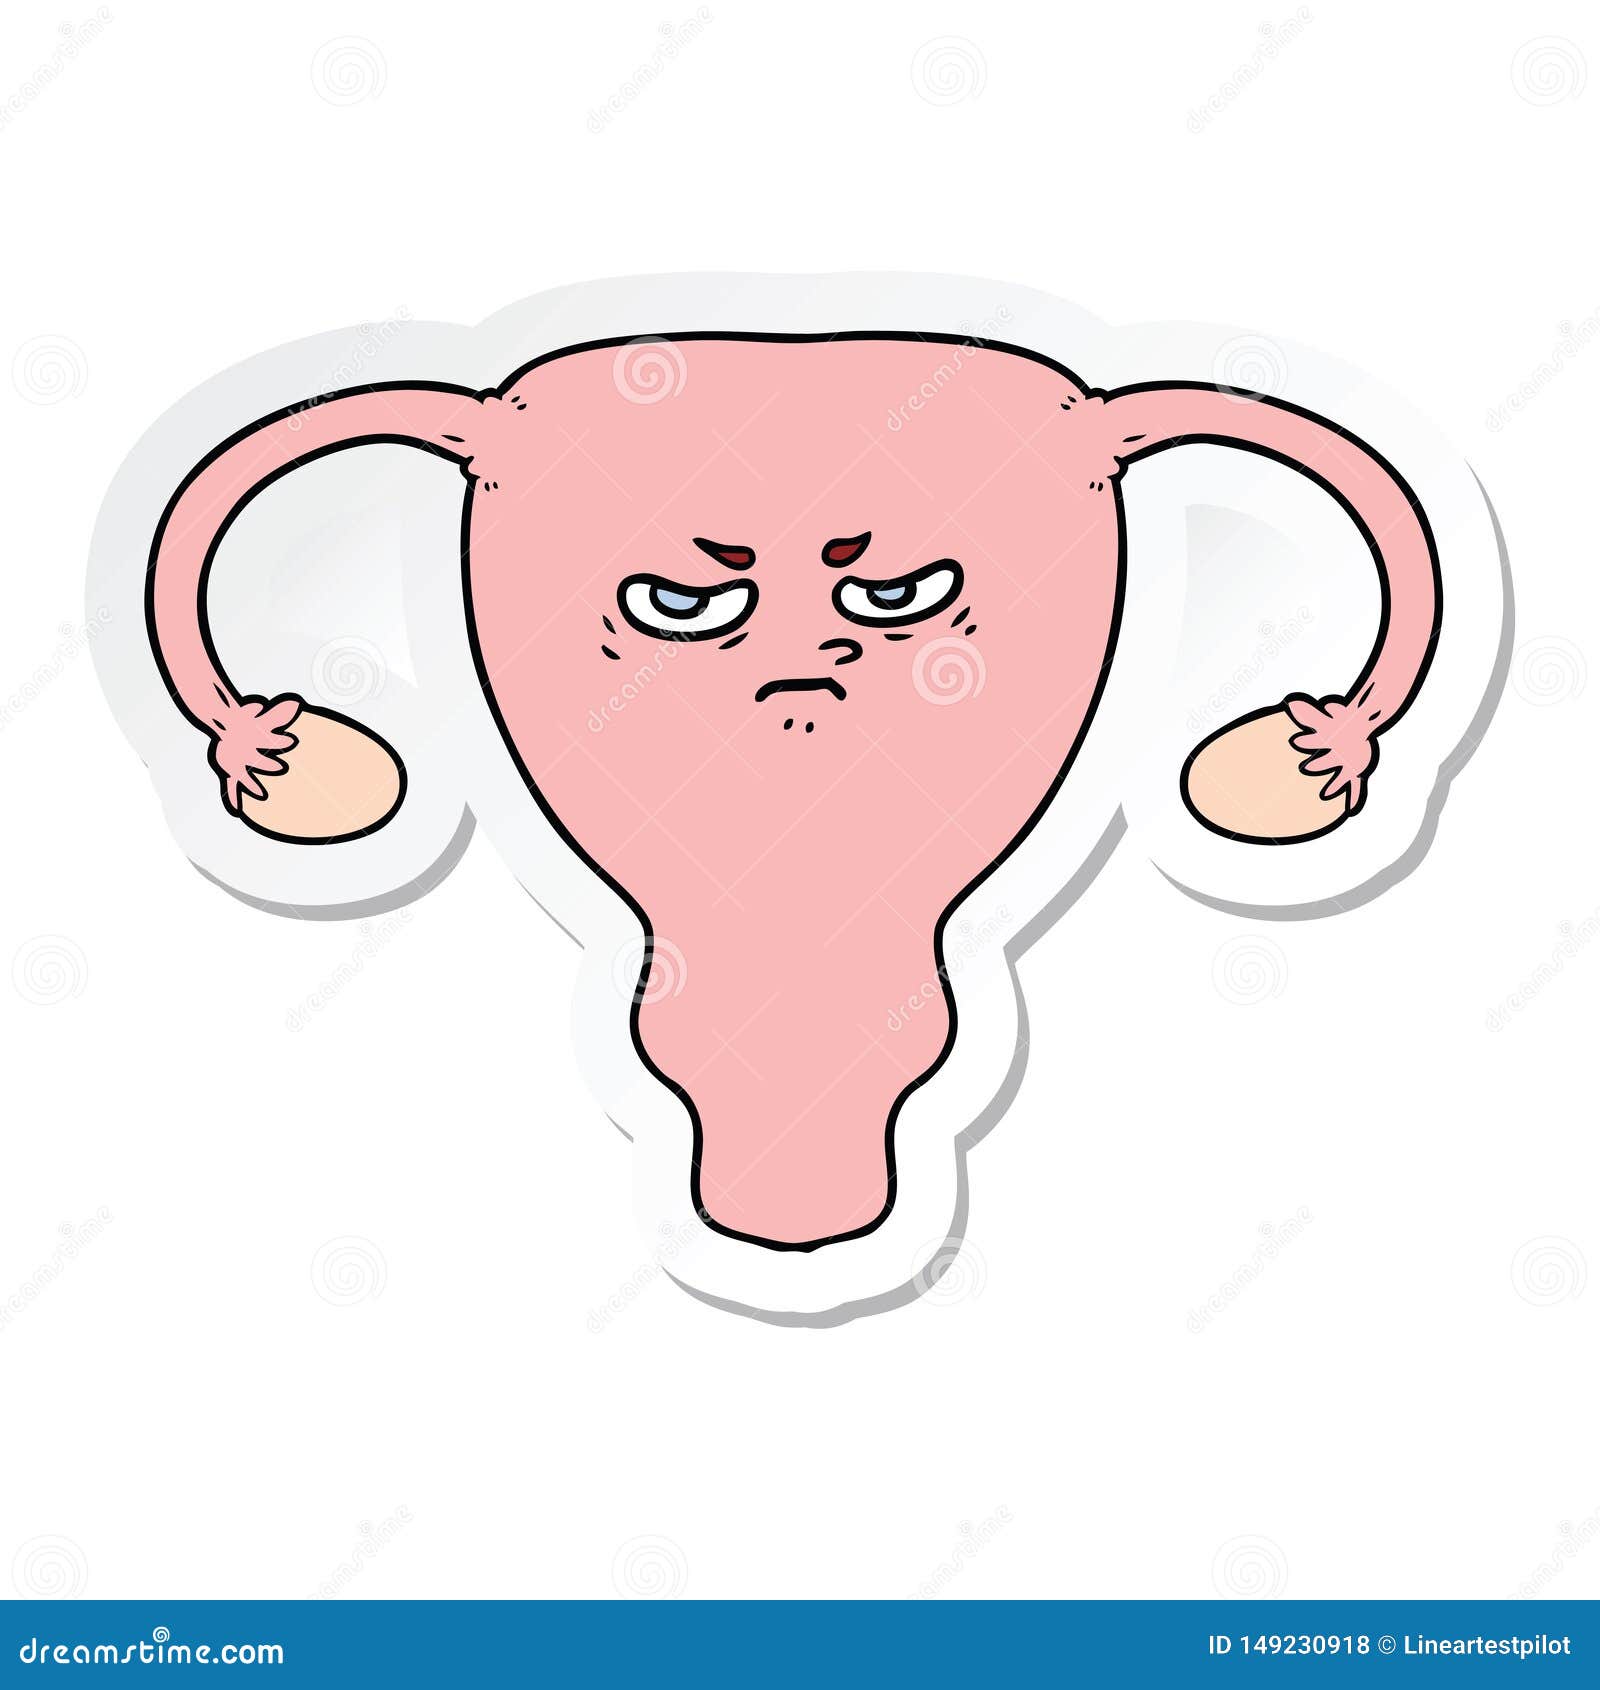 Sticker of a Cartoon Angry Uterus Stock Vector - Illustration of ...